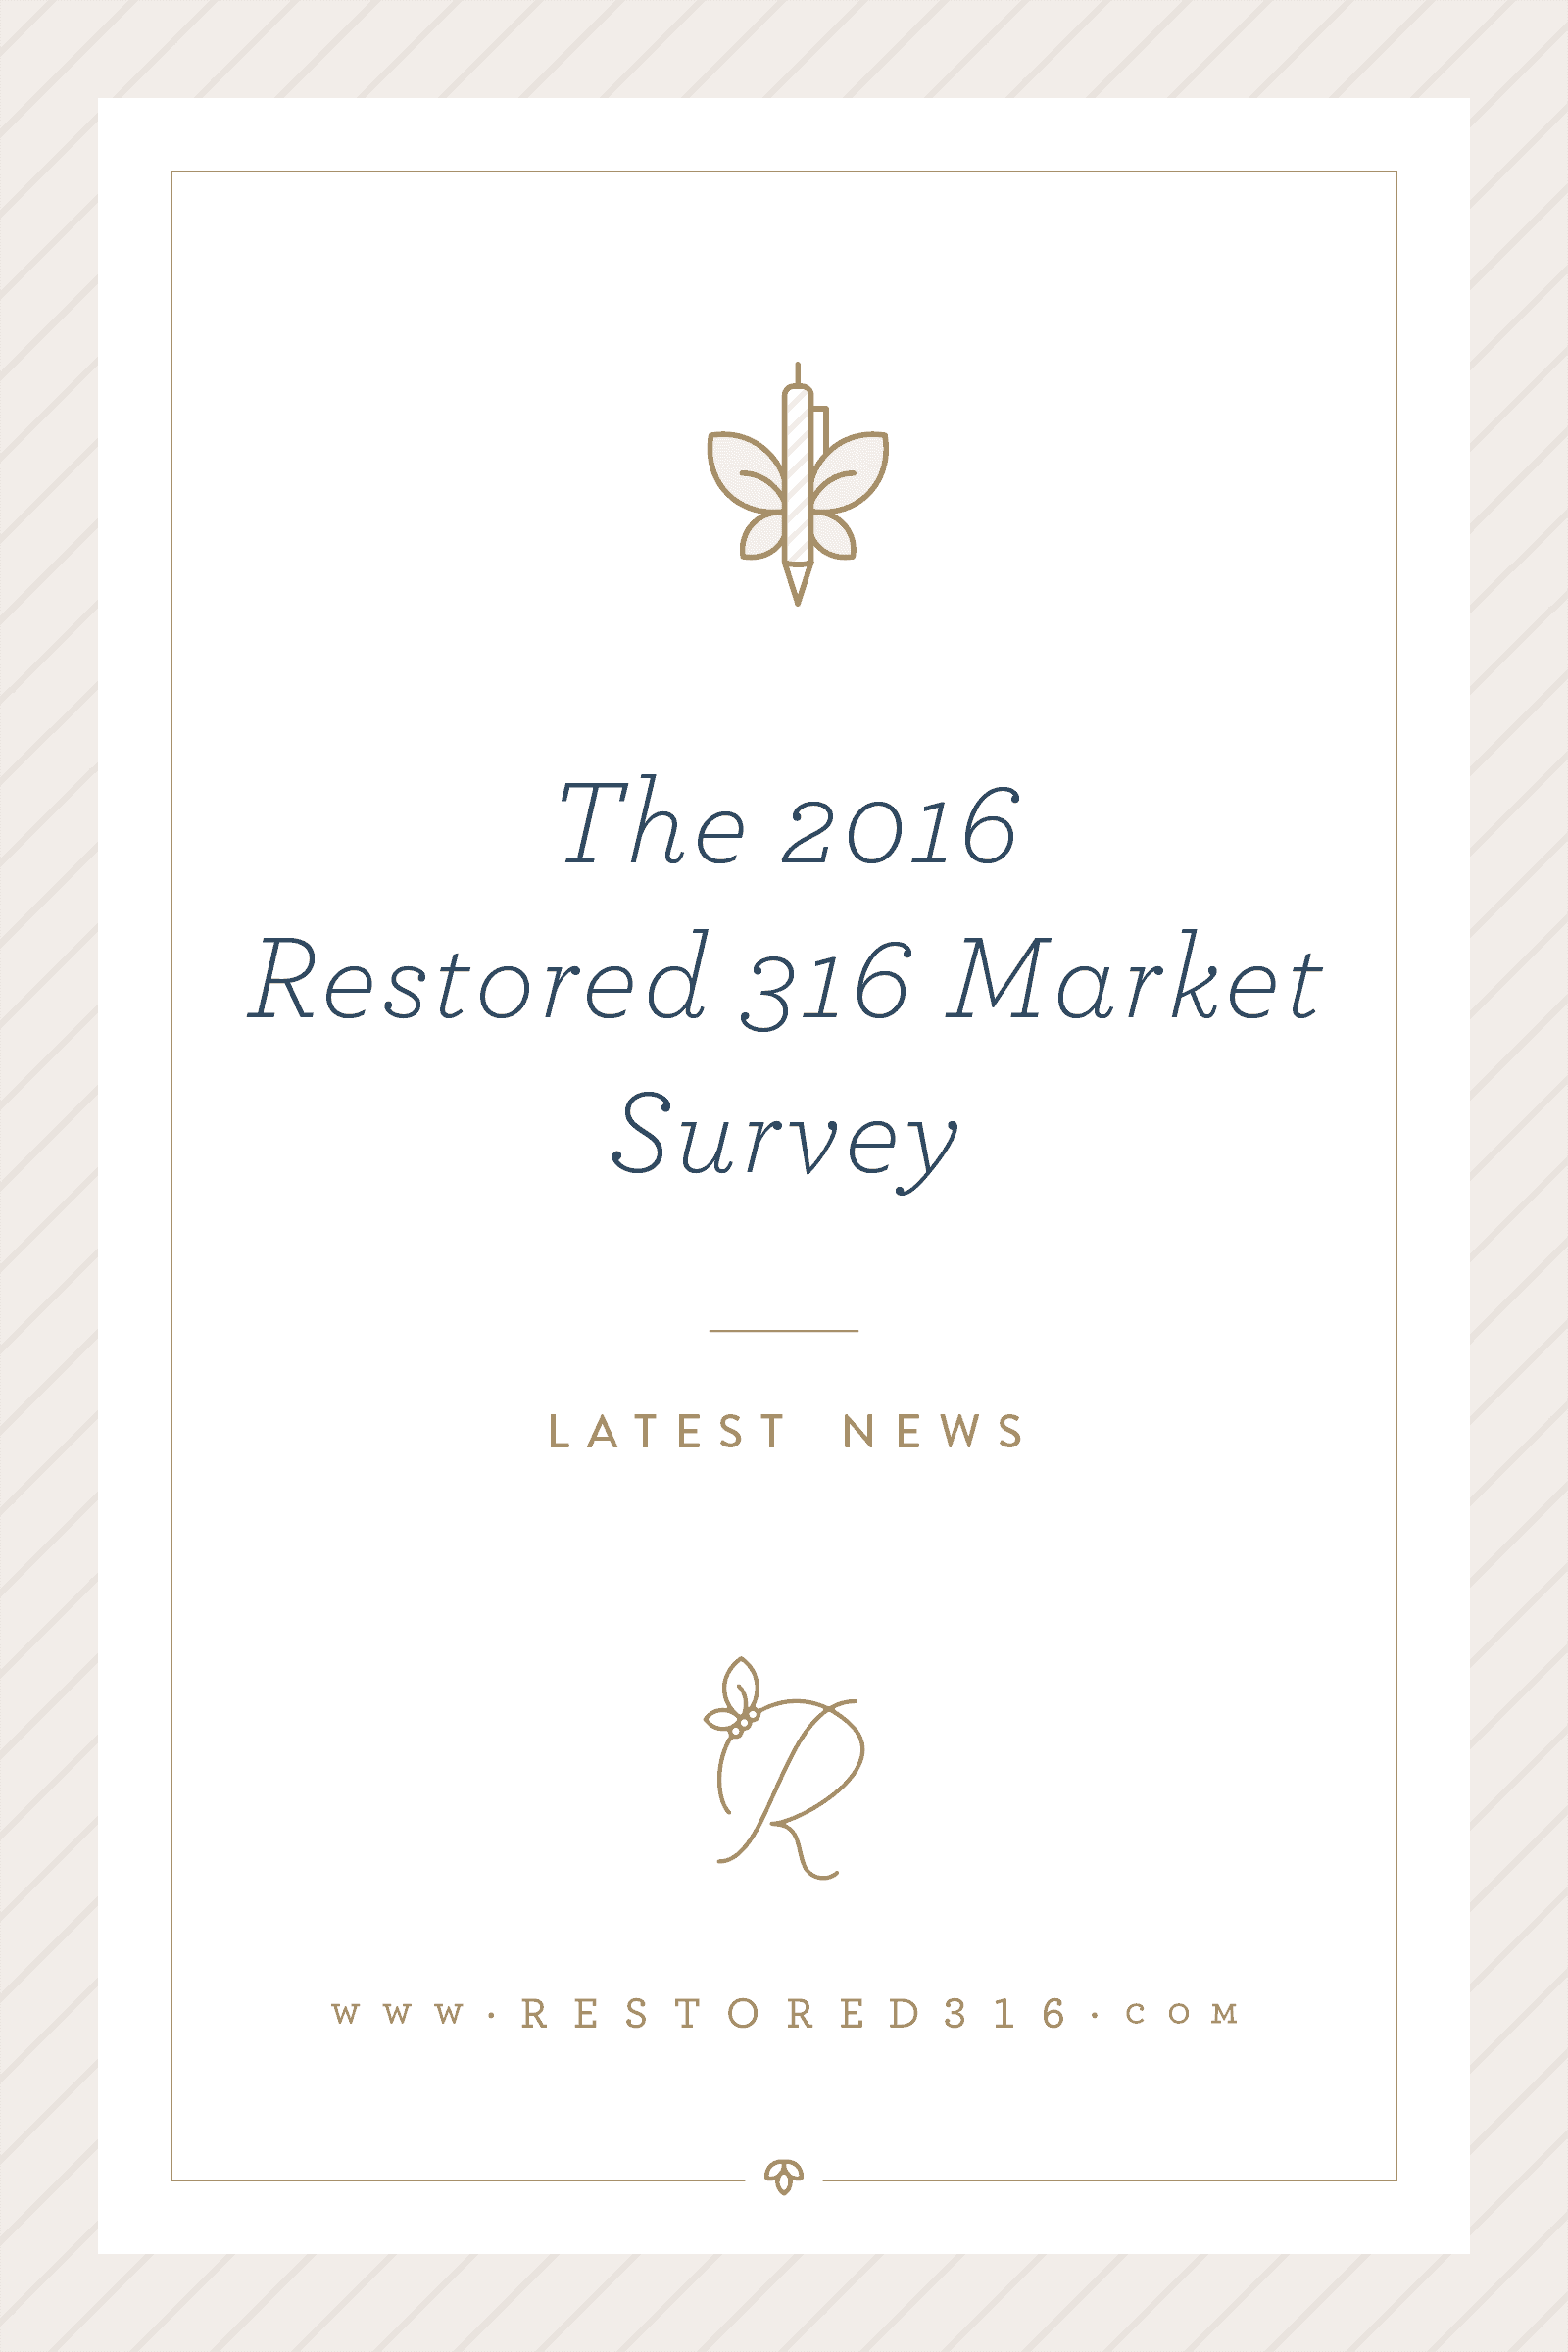 The 2016 Restored 316 Market Survey